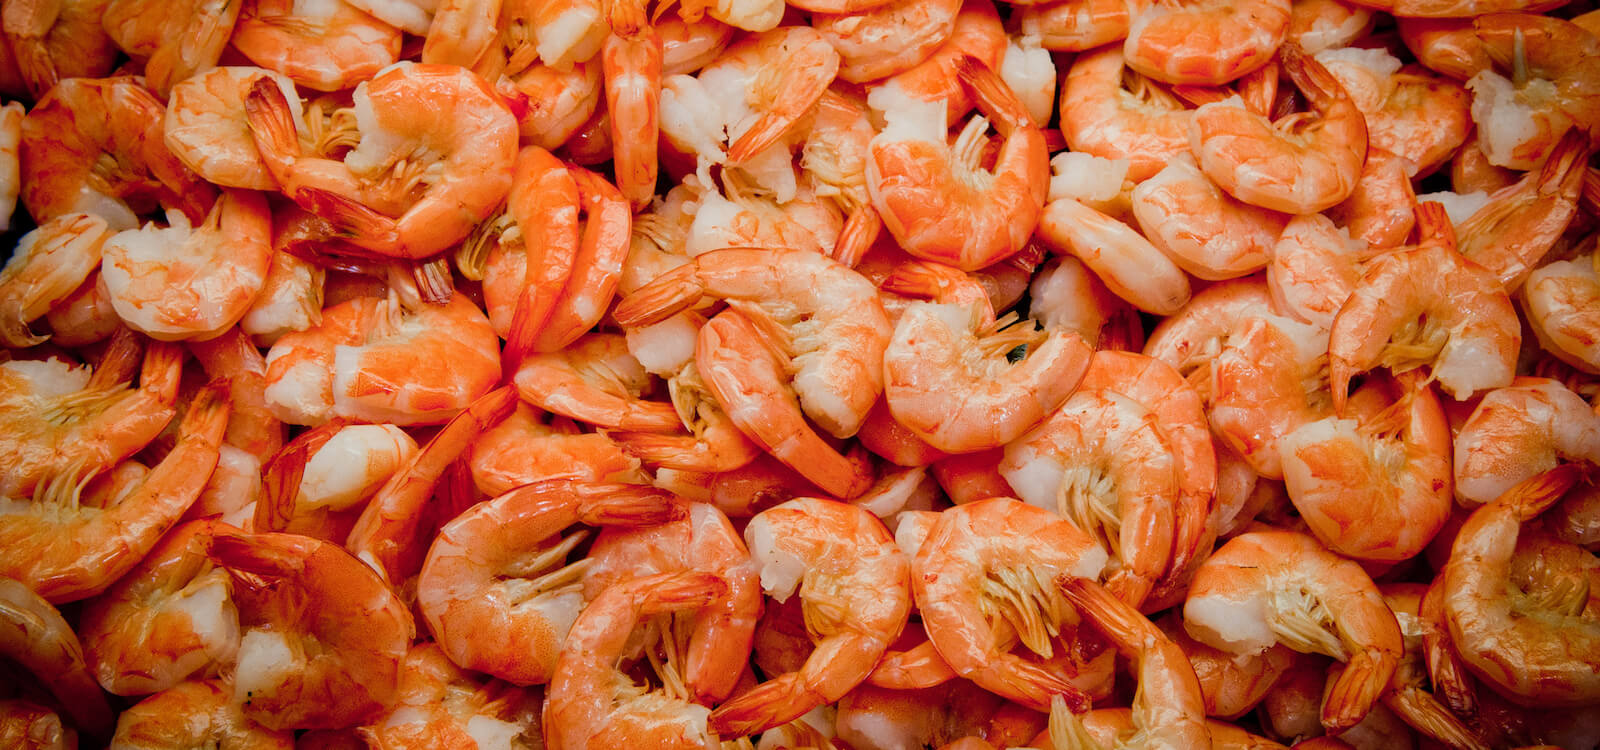 MustDo.com | Sweet pink Gulf shrimp! Sarasota, Siesta Key, Venice best restaurants to eat at while on vacation.